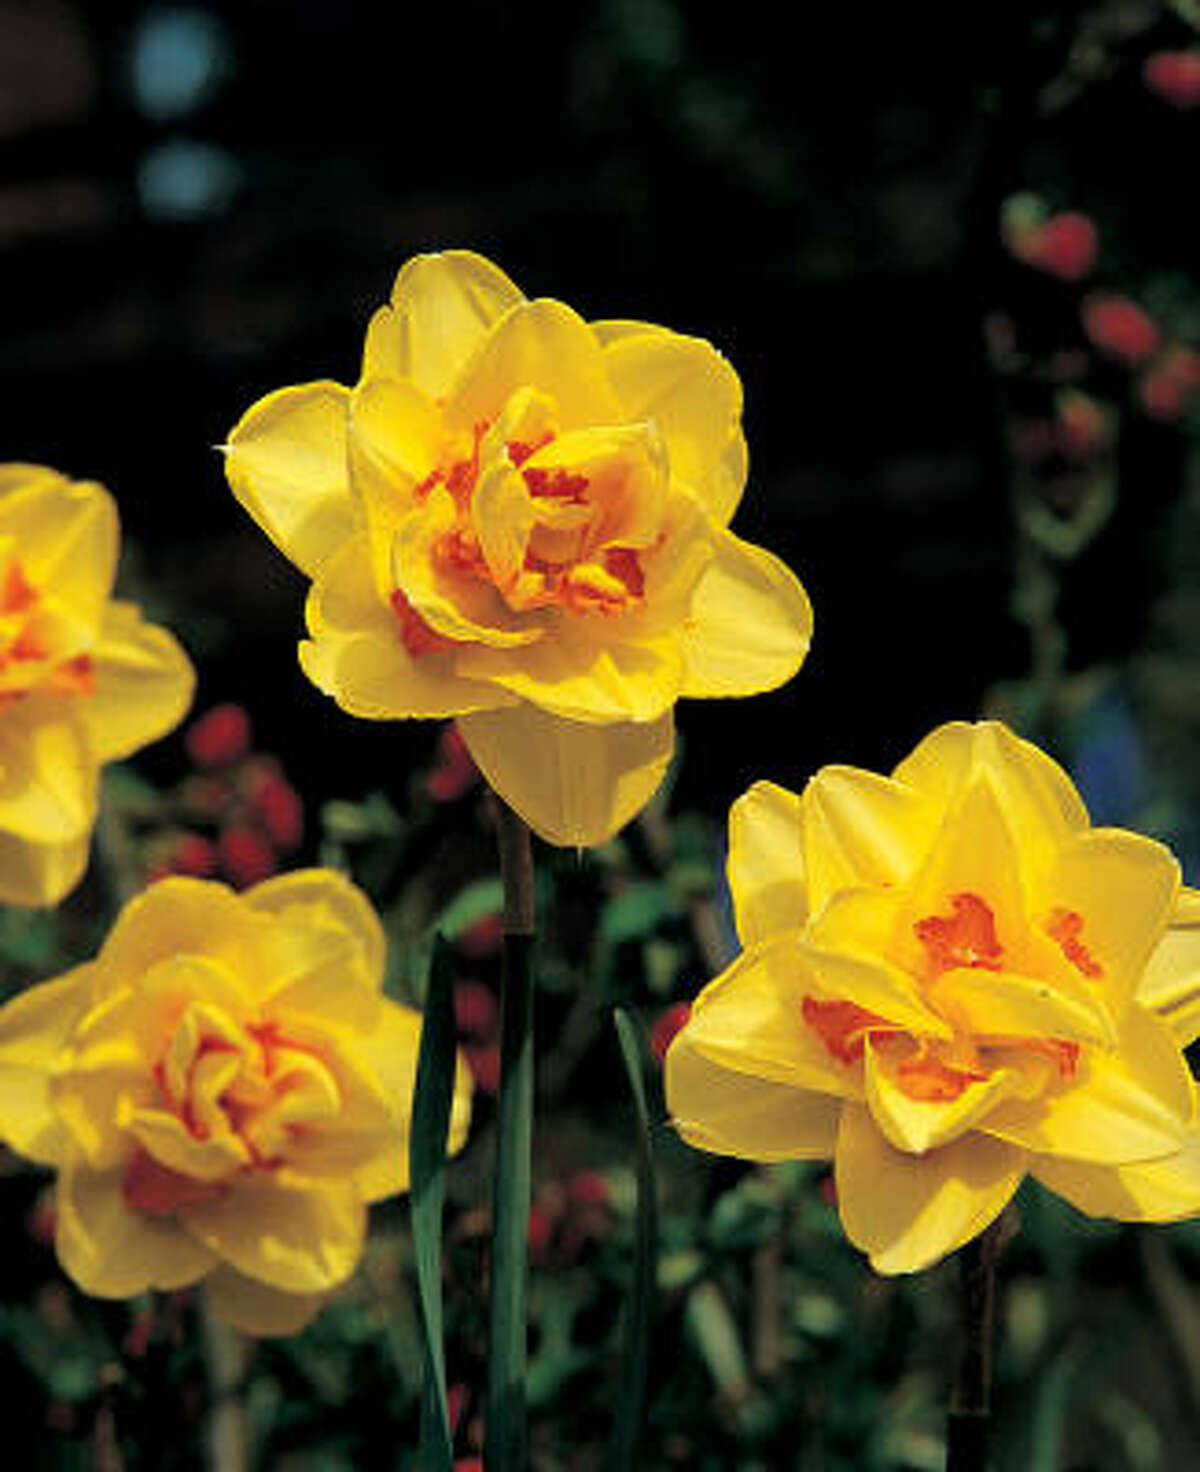 'Tahiti' daffodilKathy Huber on daffodils | Houston Plant Database daffodils | Top 10 daffodils for Houston | Bulb & Plant Mart | Top 10 naturalizing bulbs for Houston | Submit your garden photos | Houston Plant Database | HoustonGrows.com